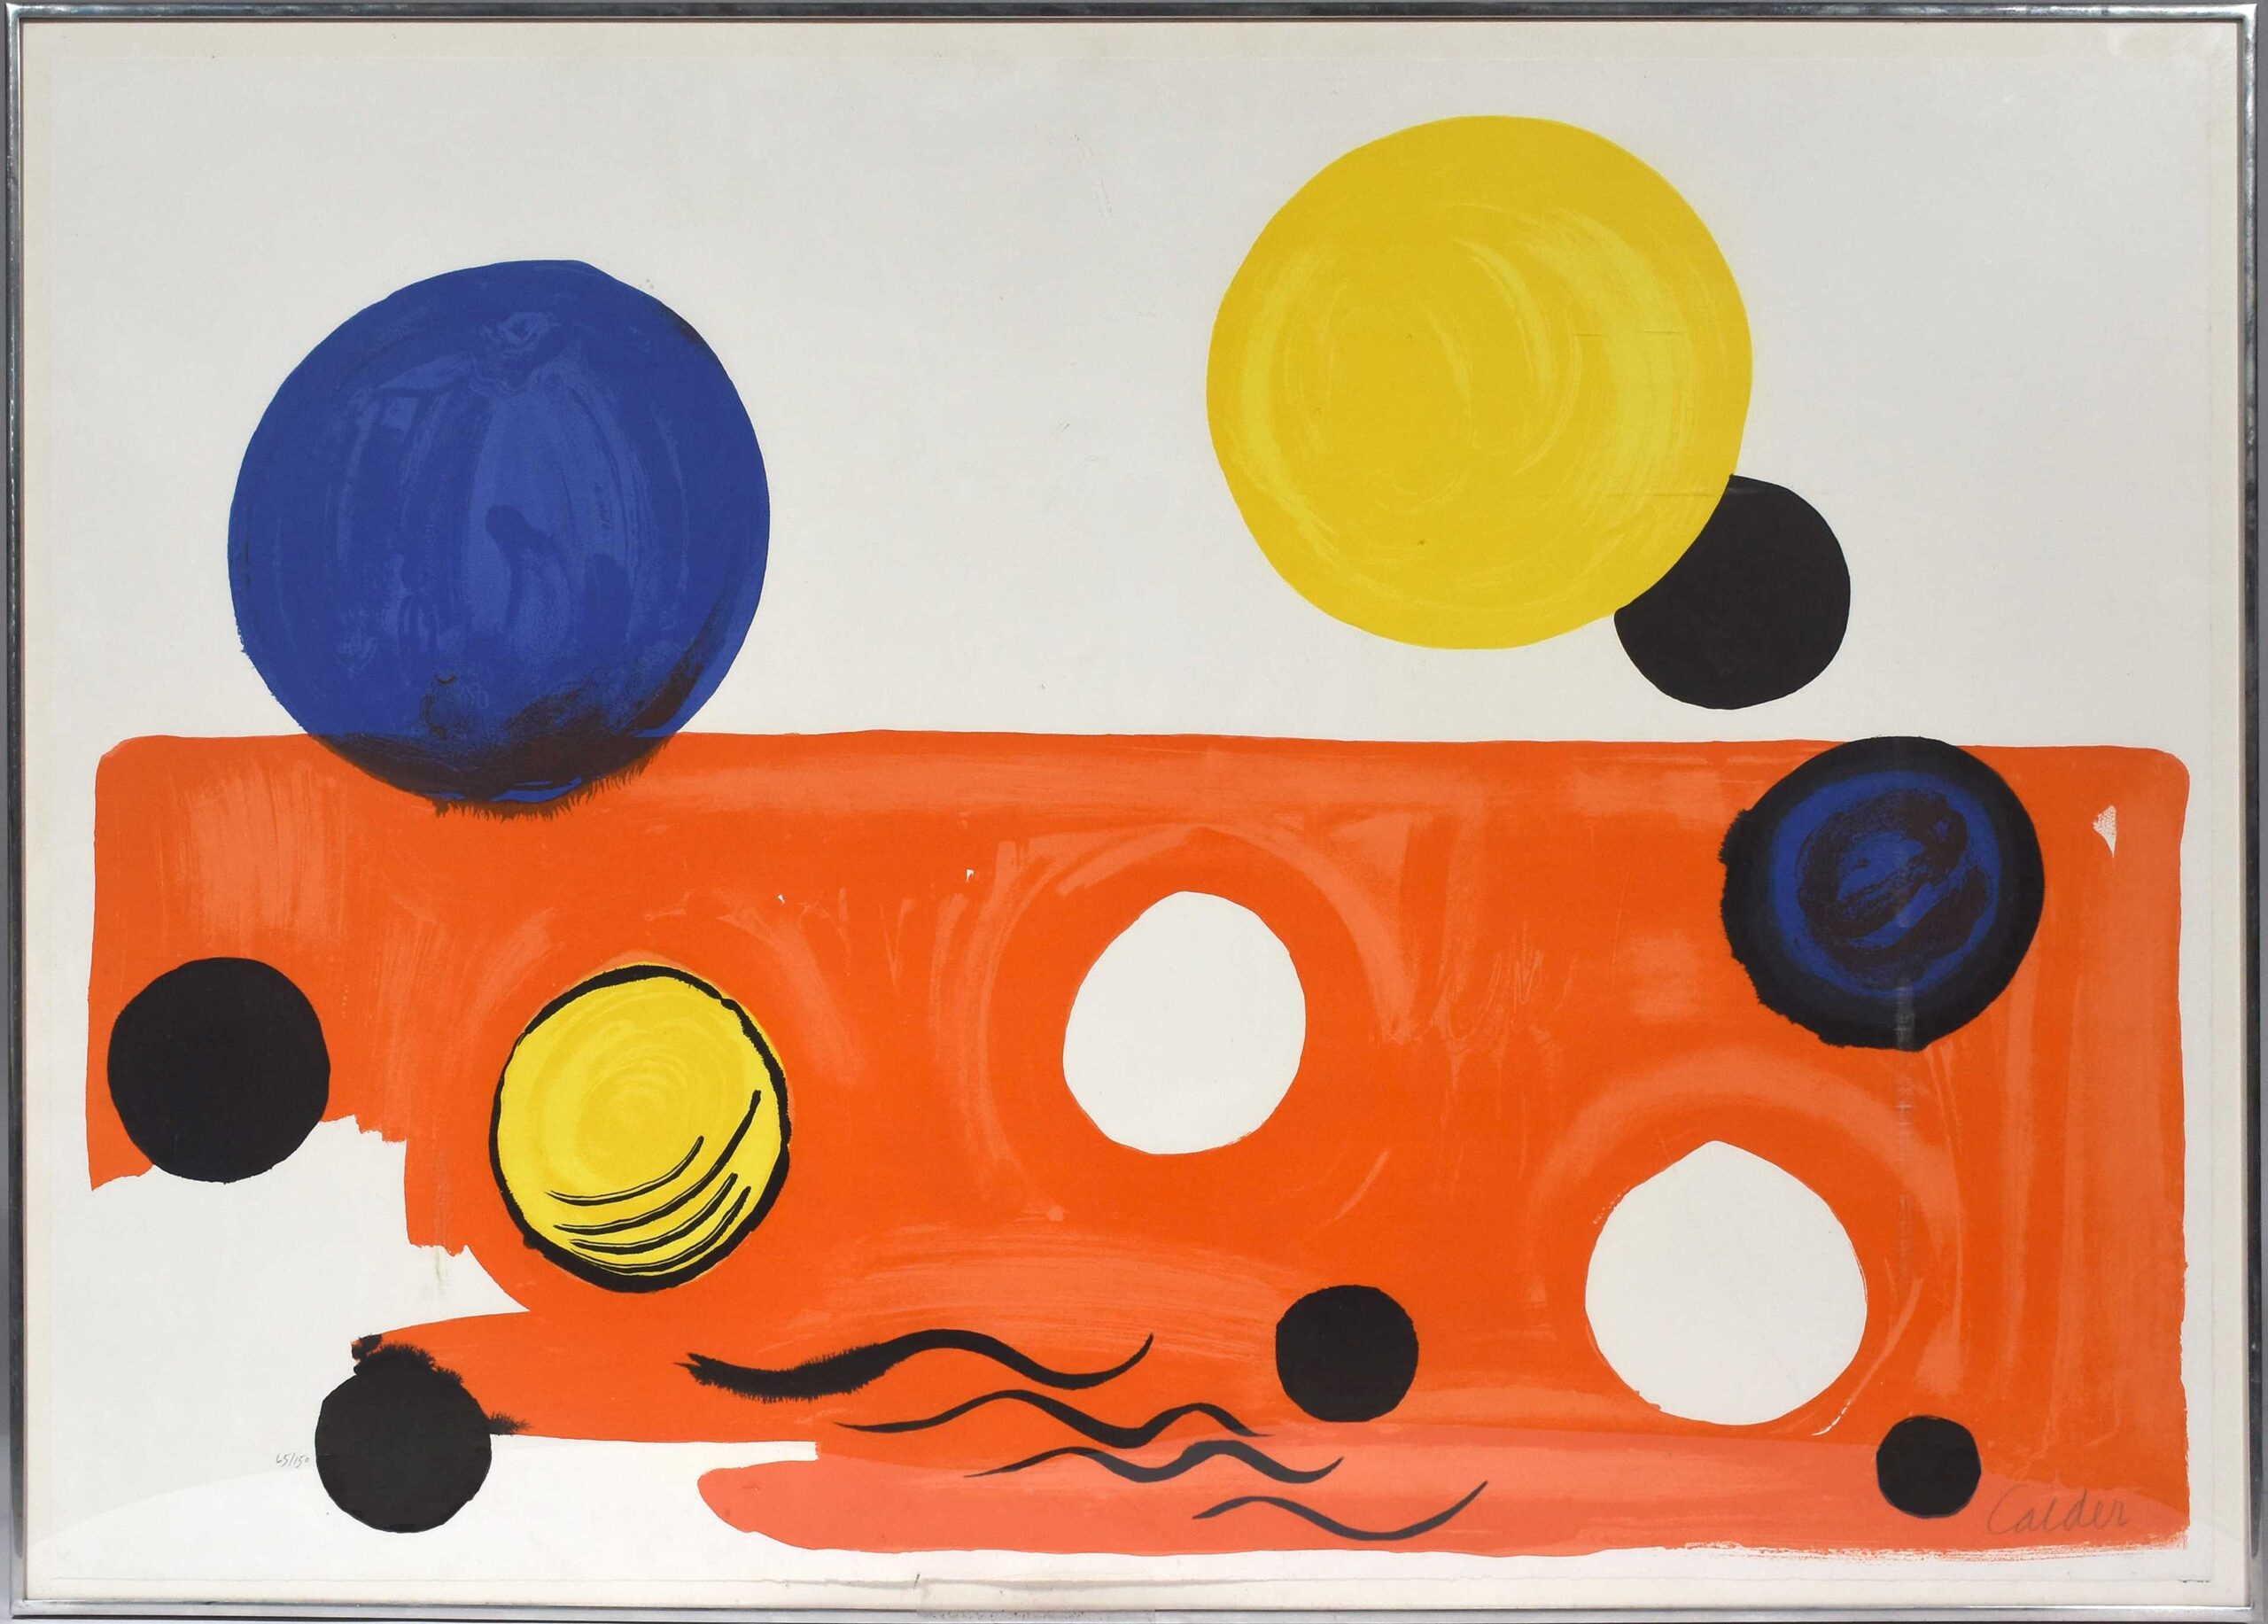 Alexander Calder colored lithograph